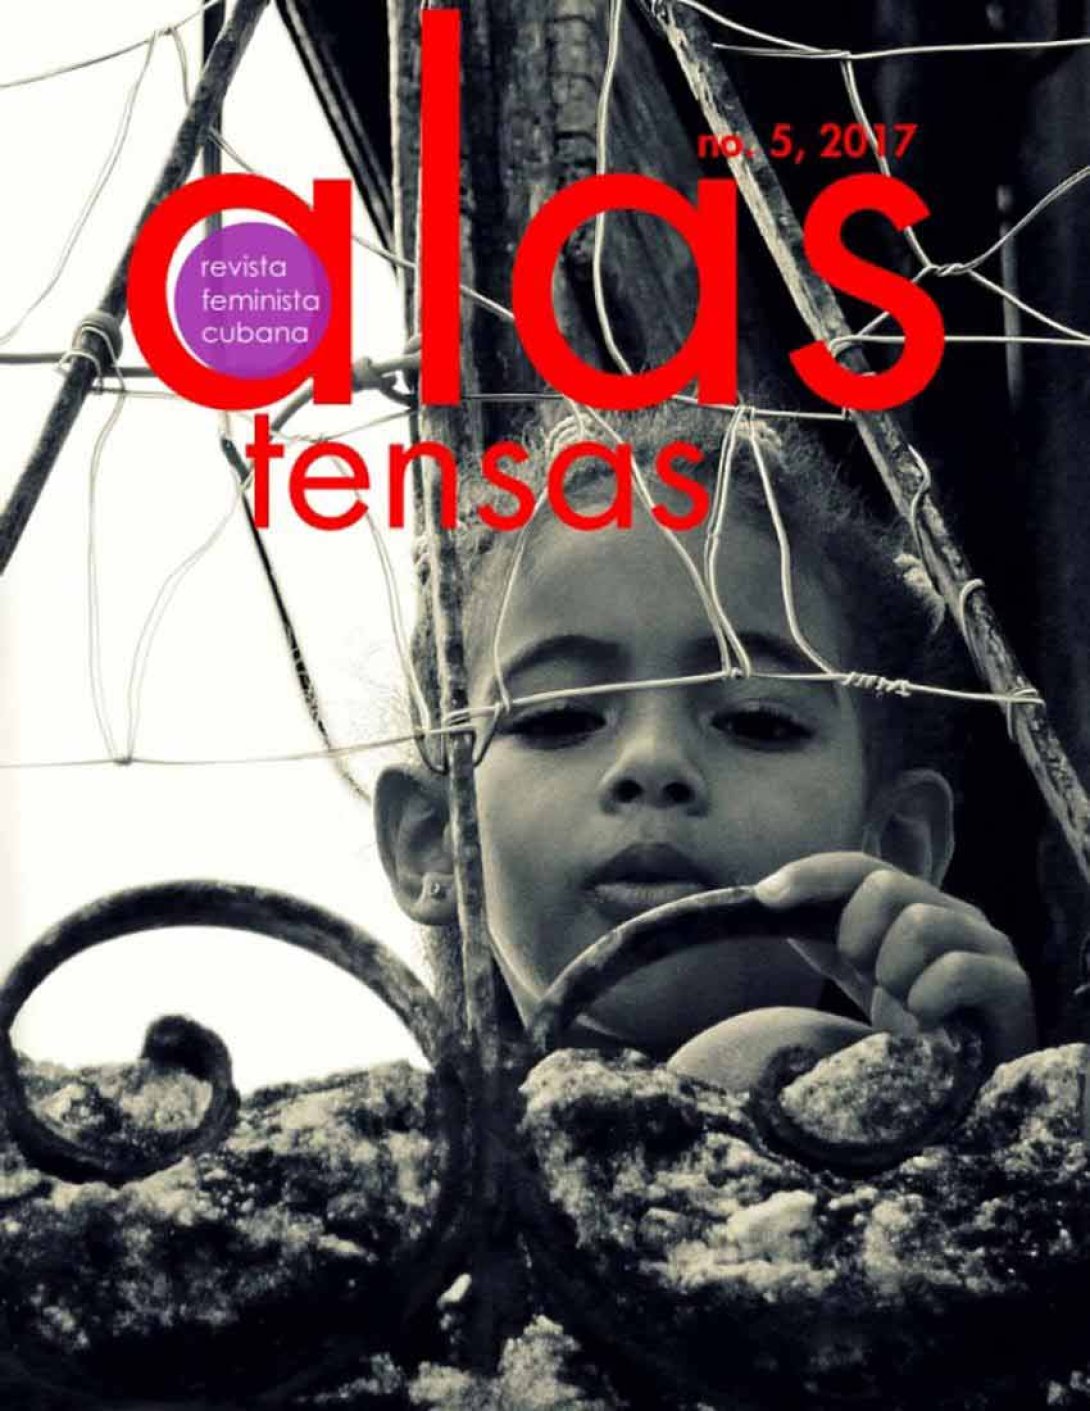 Portada de la revista feminista cubana "Alas tensas", # 5